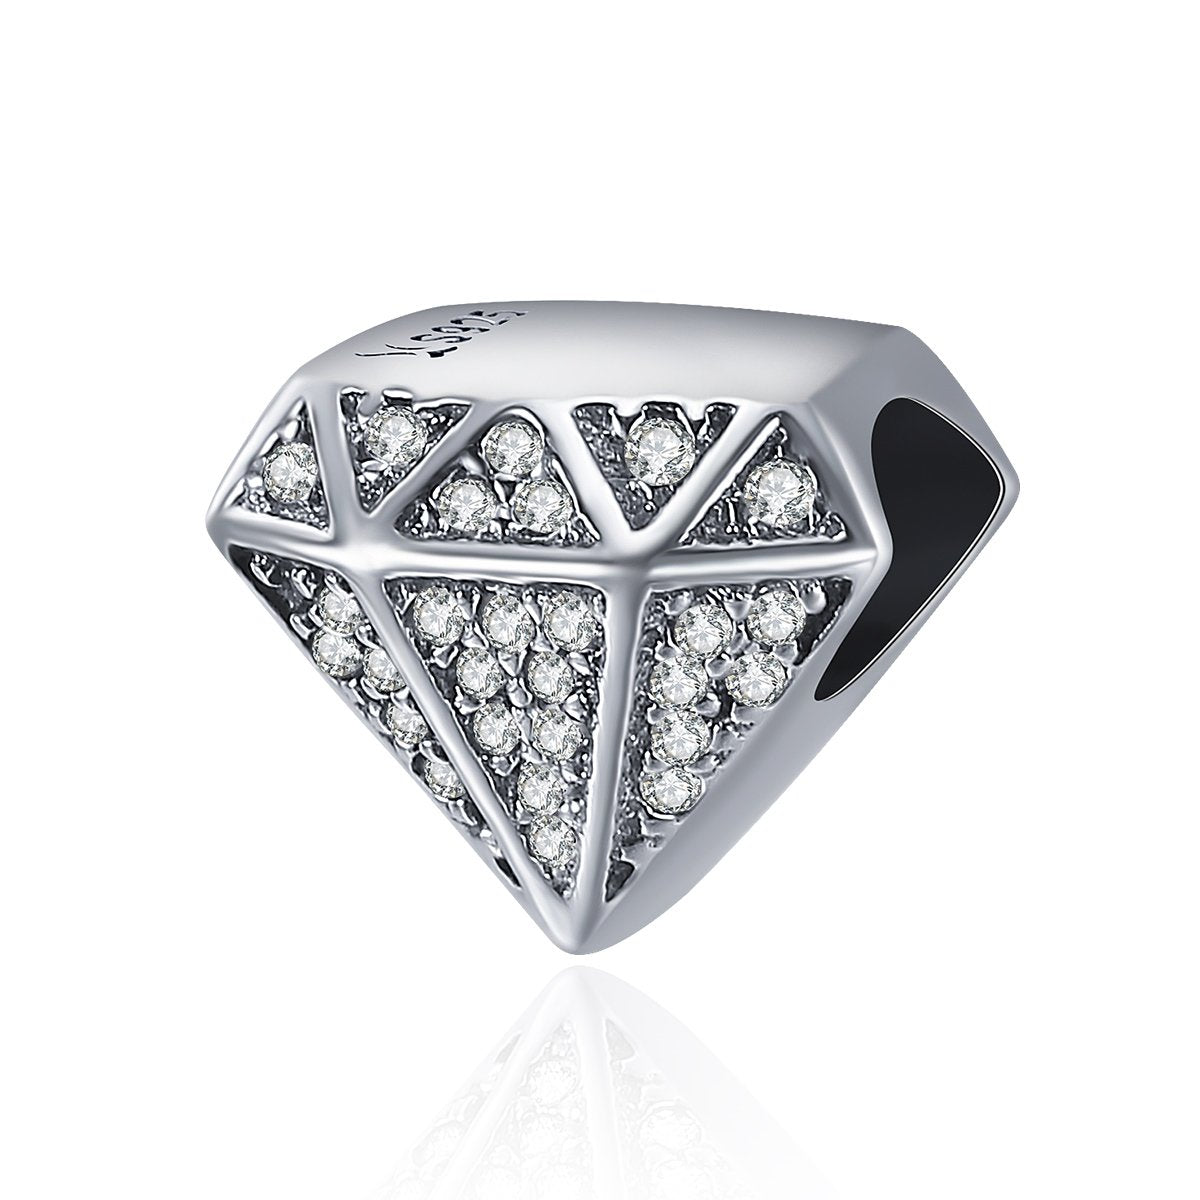 Sterling 925 silver charm the DIAMOND bead pendant fits Pandora charm and European charm bracelet Xaxe.com